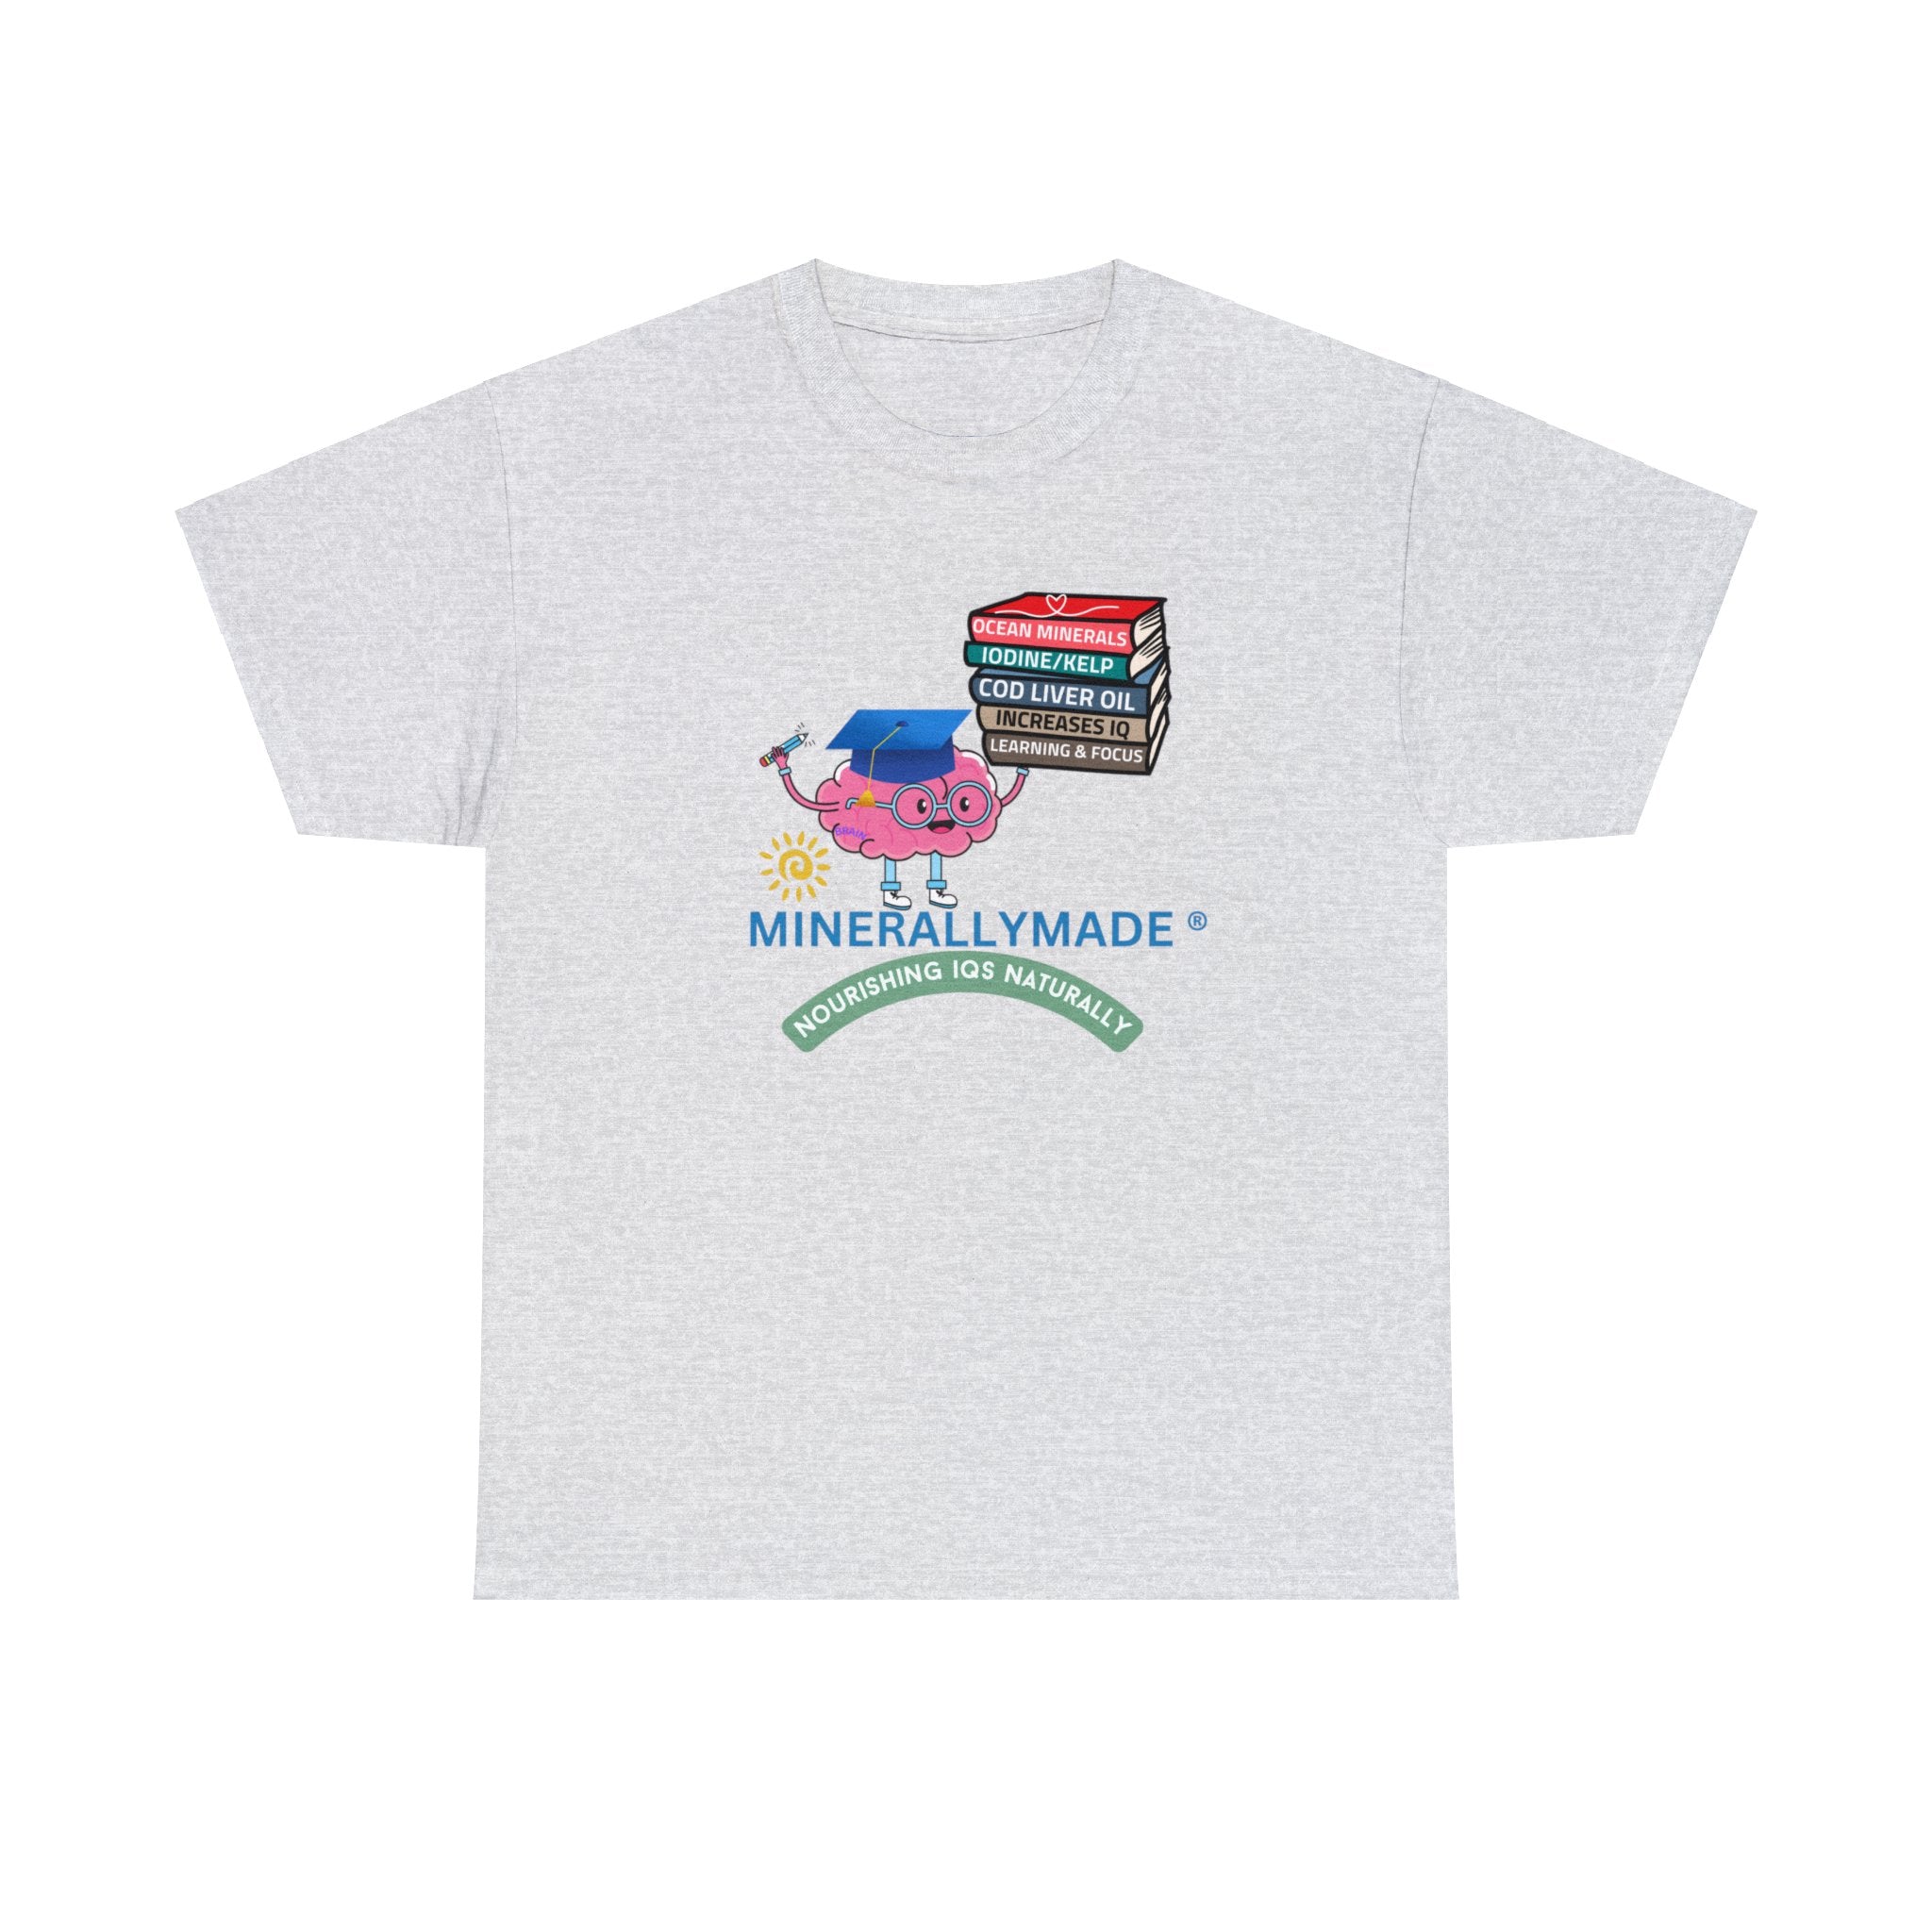 Minerallymade | Nourishing IQs Naturally | Unisex Heavy Cotton Tshirt